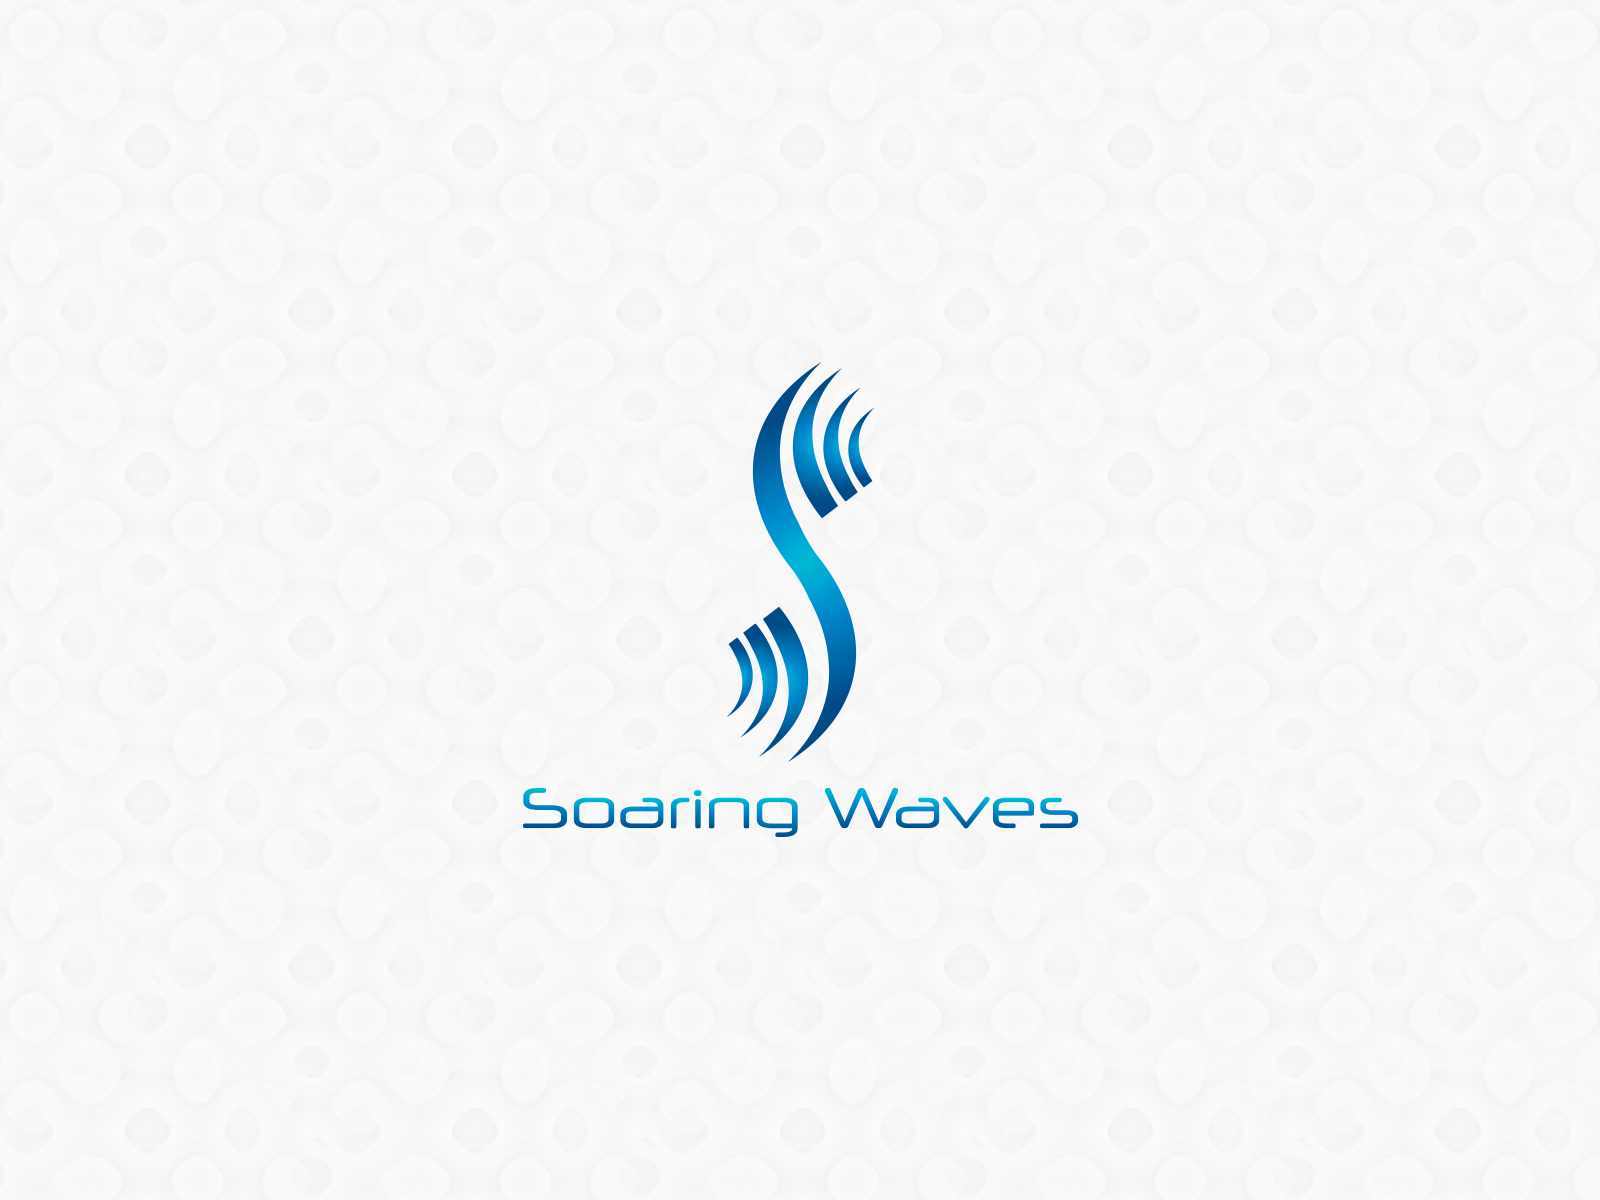 Soaring Waves